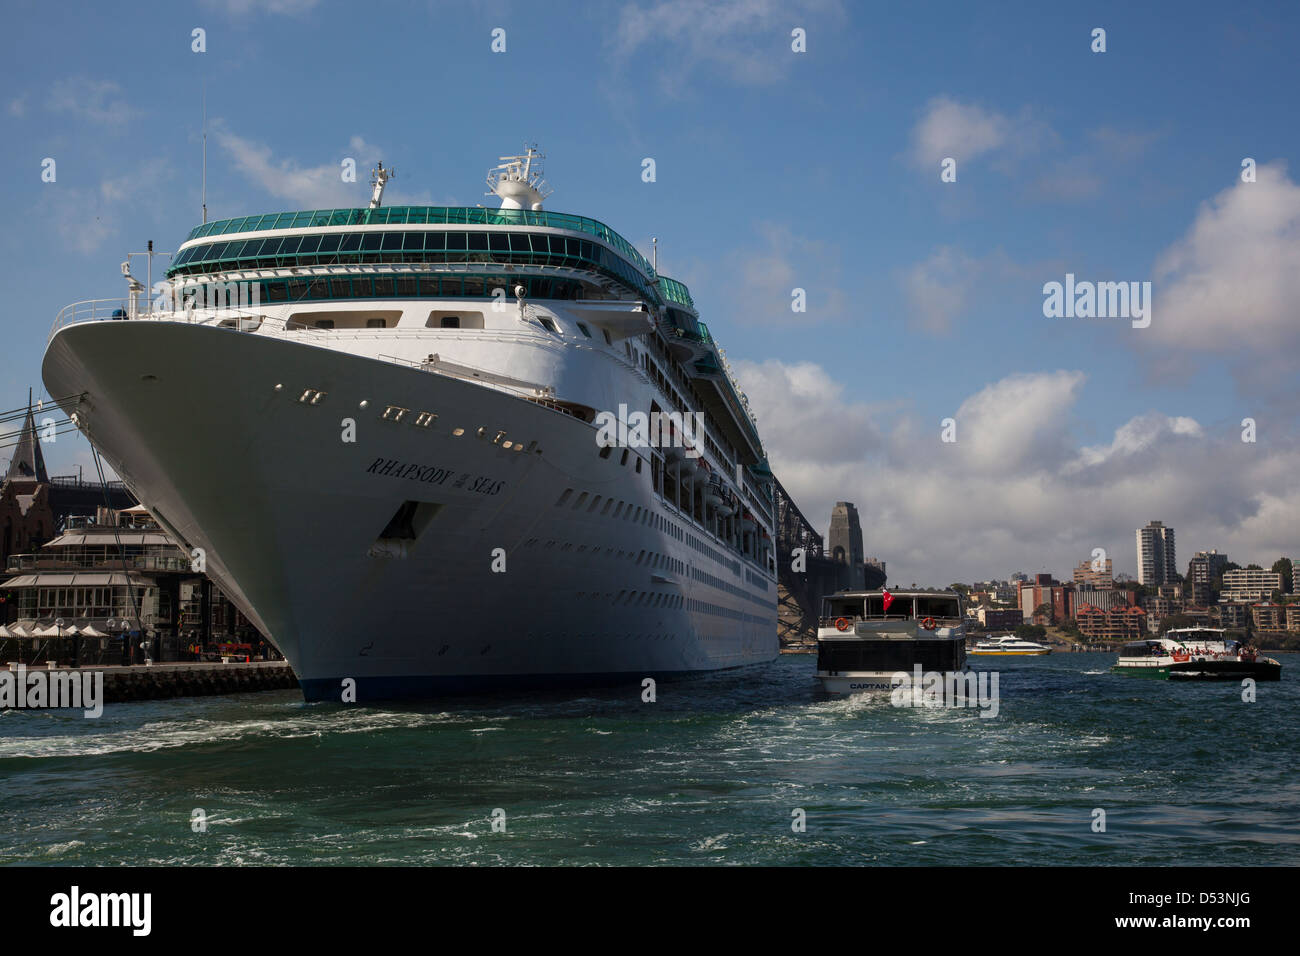 Rhapsody of the seas cruis ship in Sydney Harbour Stock Photo